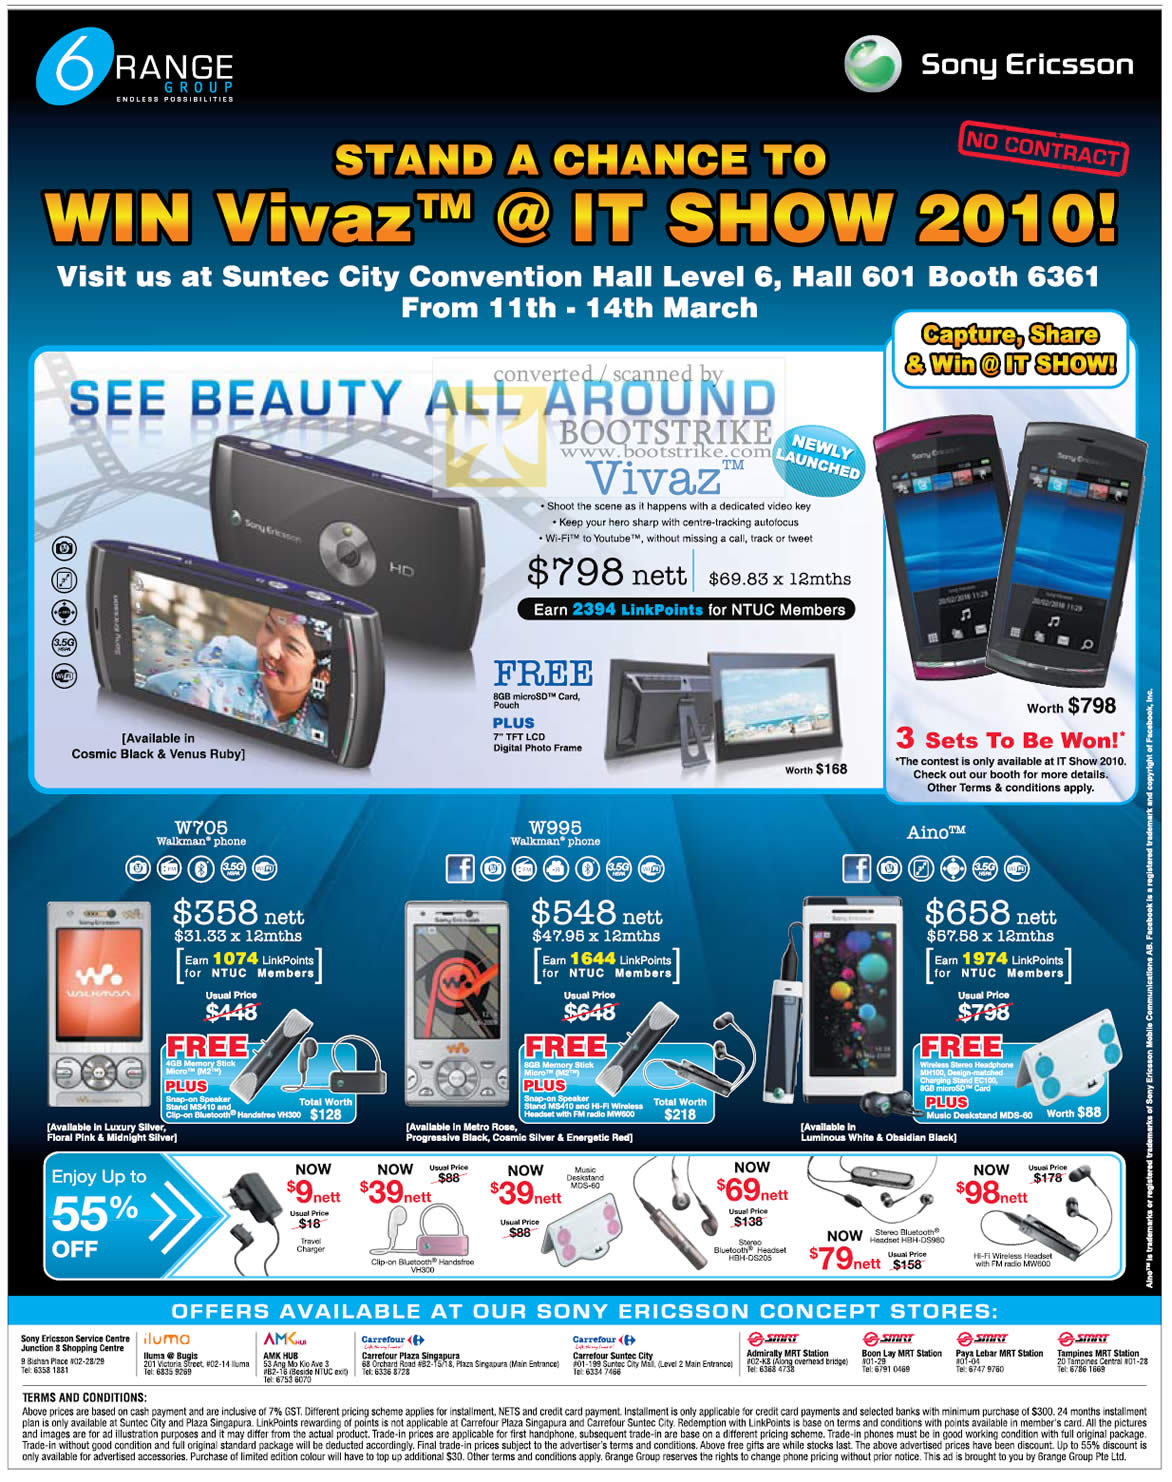 IT Show 2010 price list image brochure of 6Range Mobile Phones Vivaz Sony Ericsson Walkman W705 W995 Aino Accessories Bluetooth